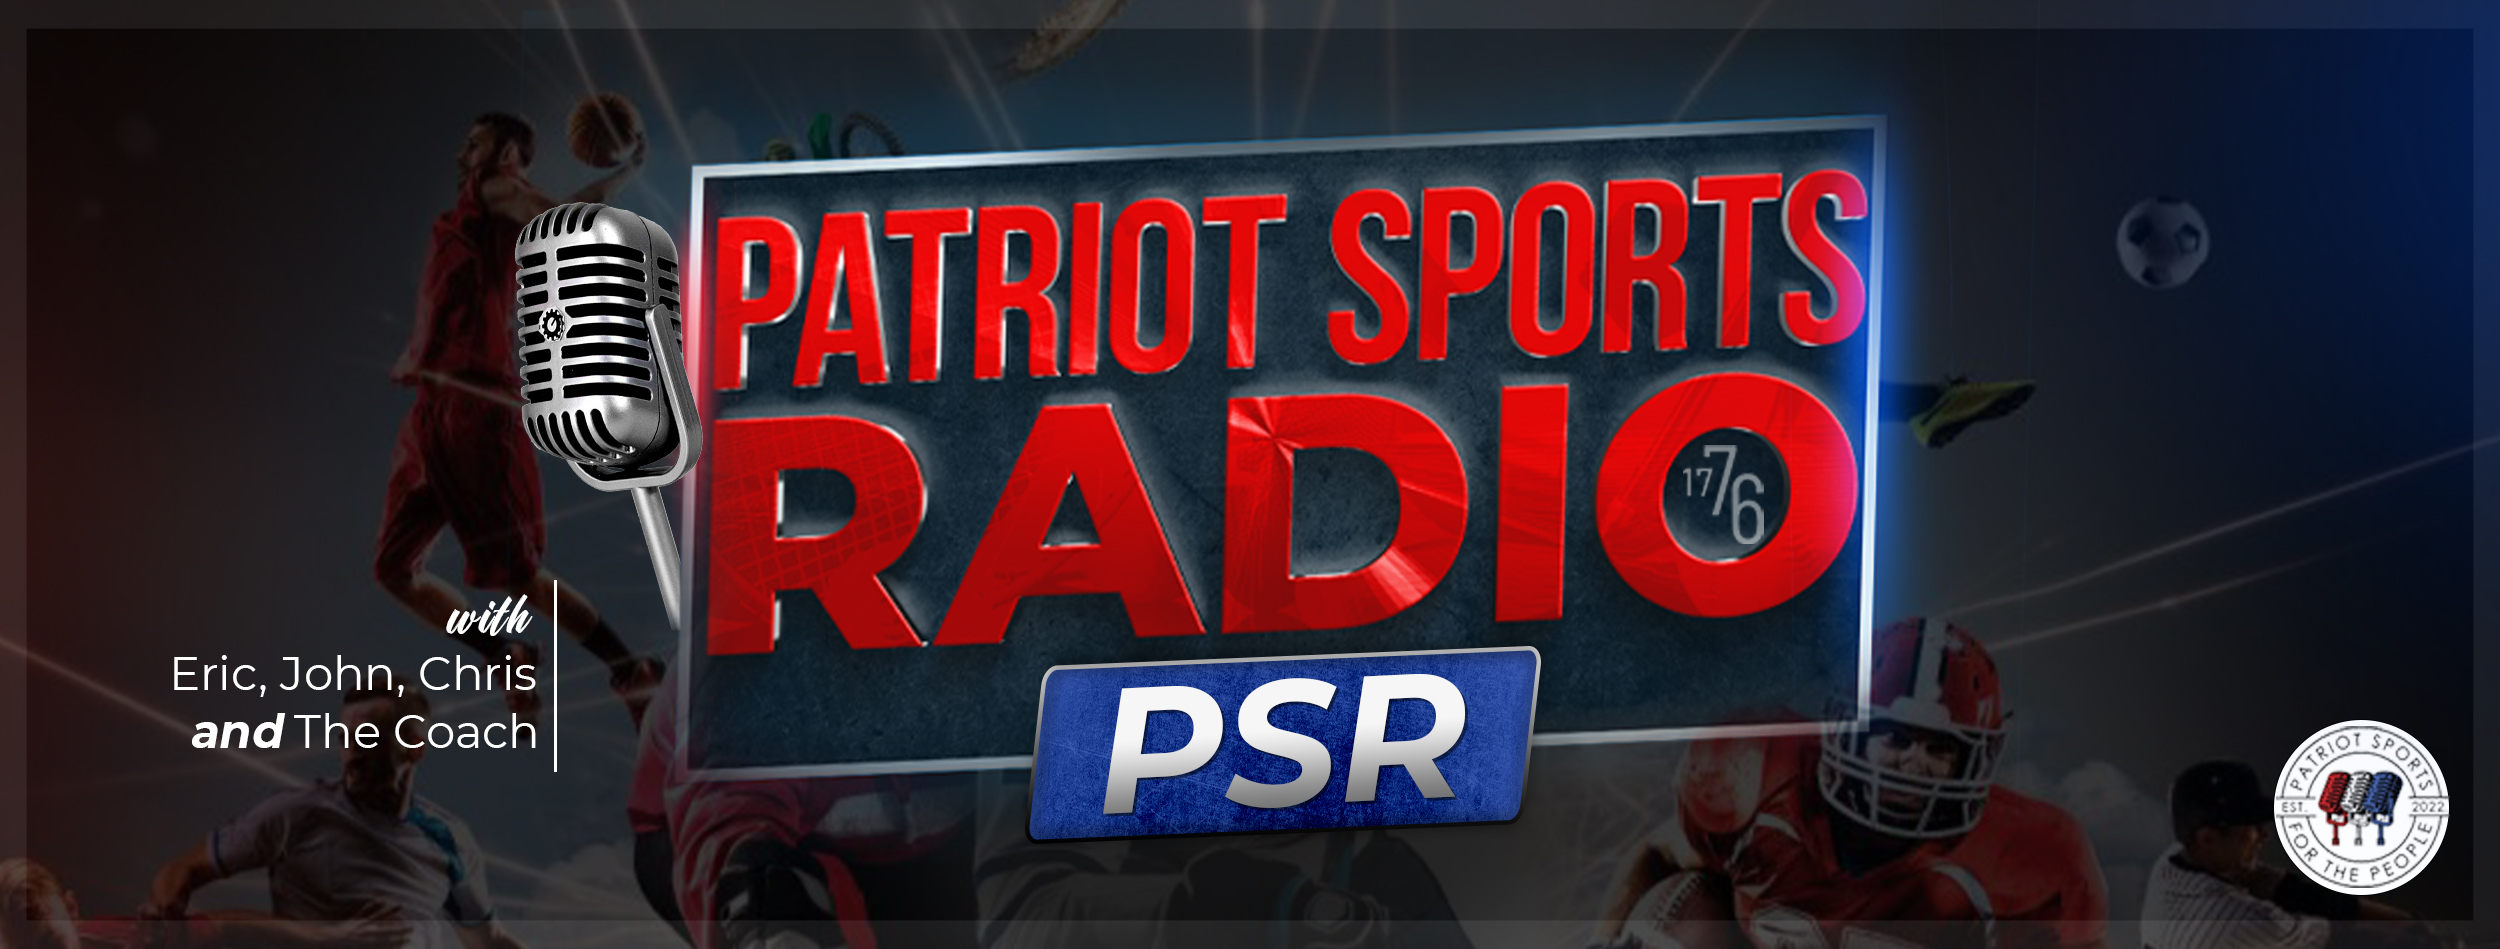 Patriot Sports Radio